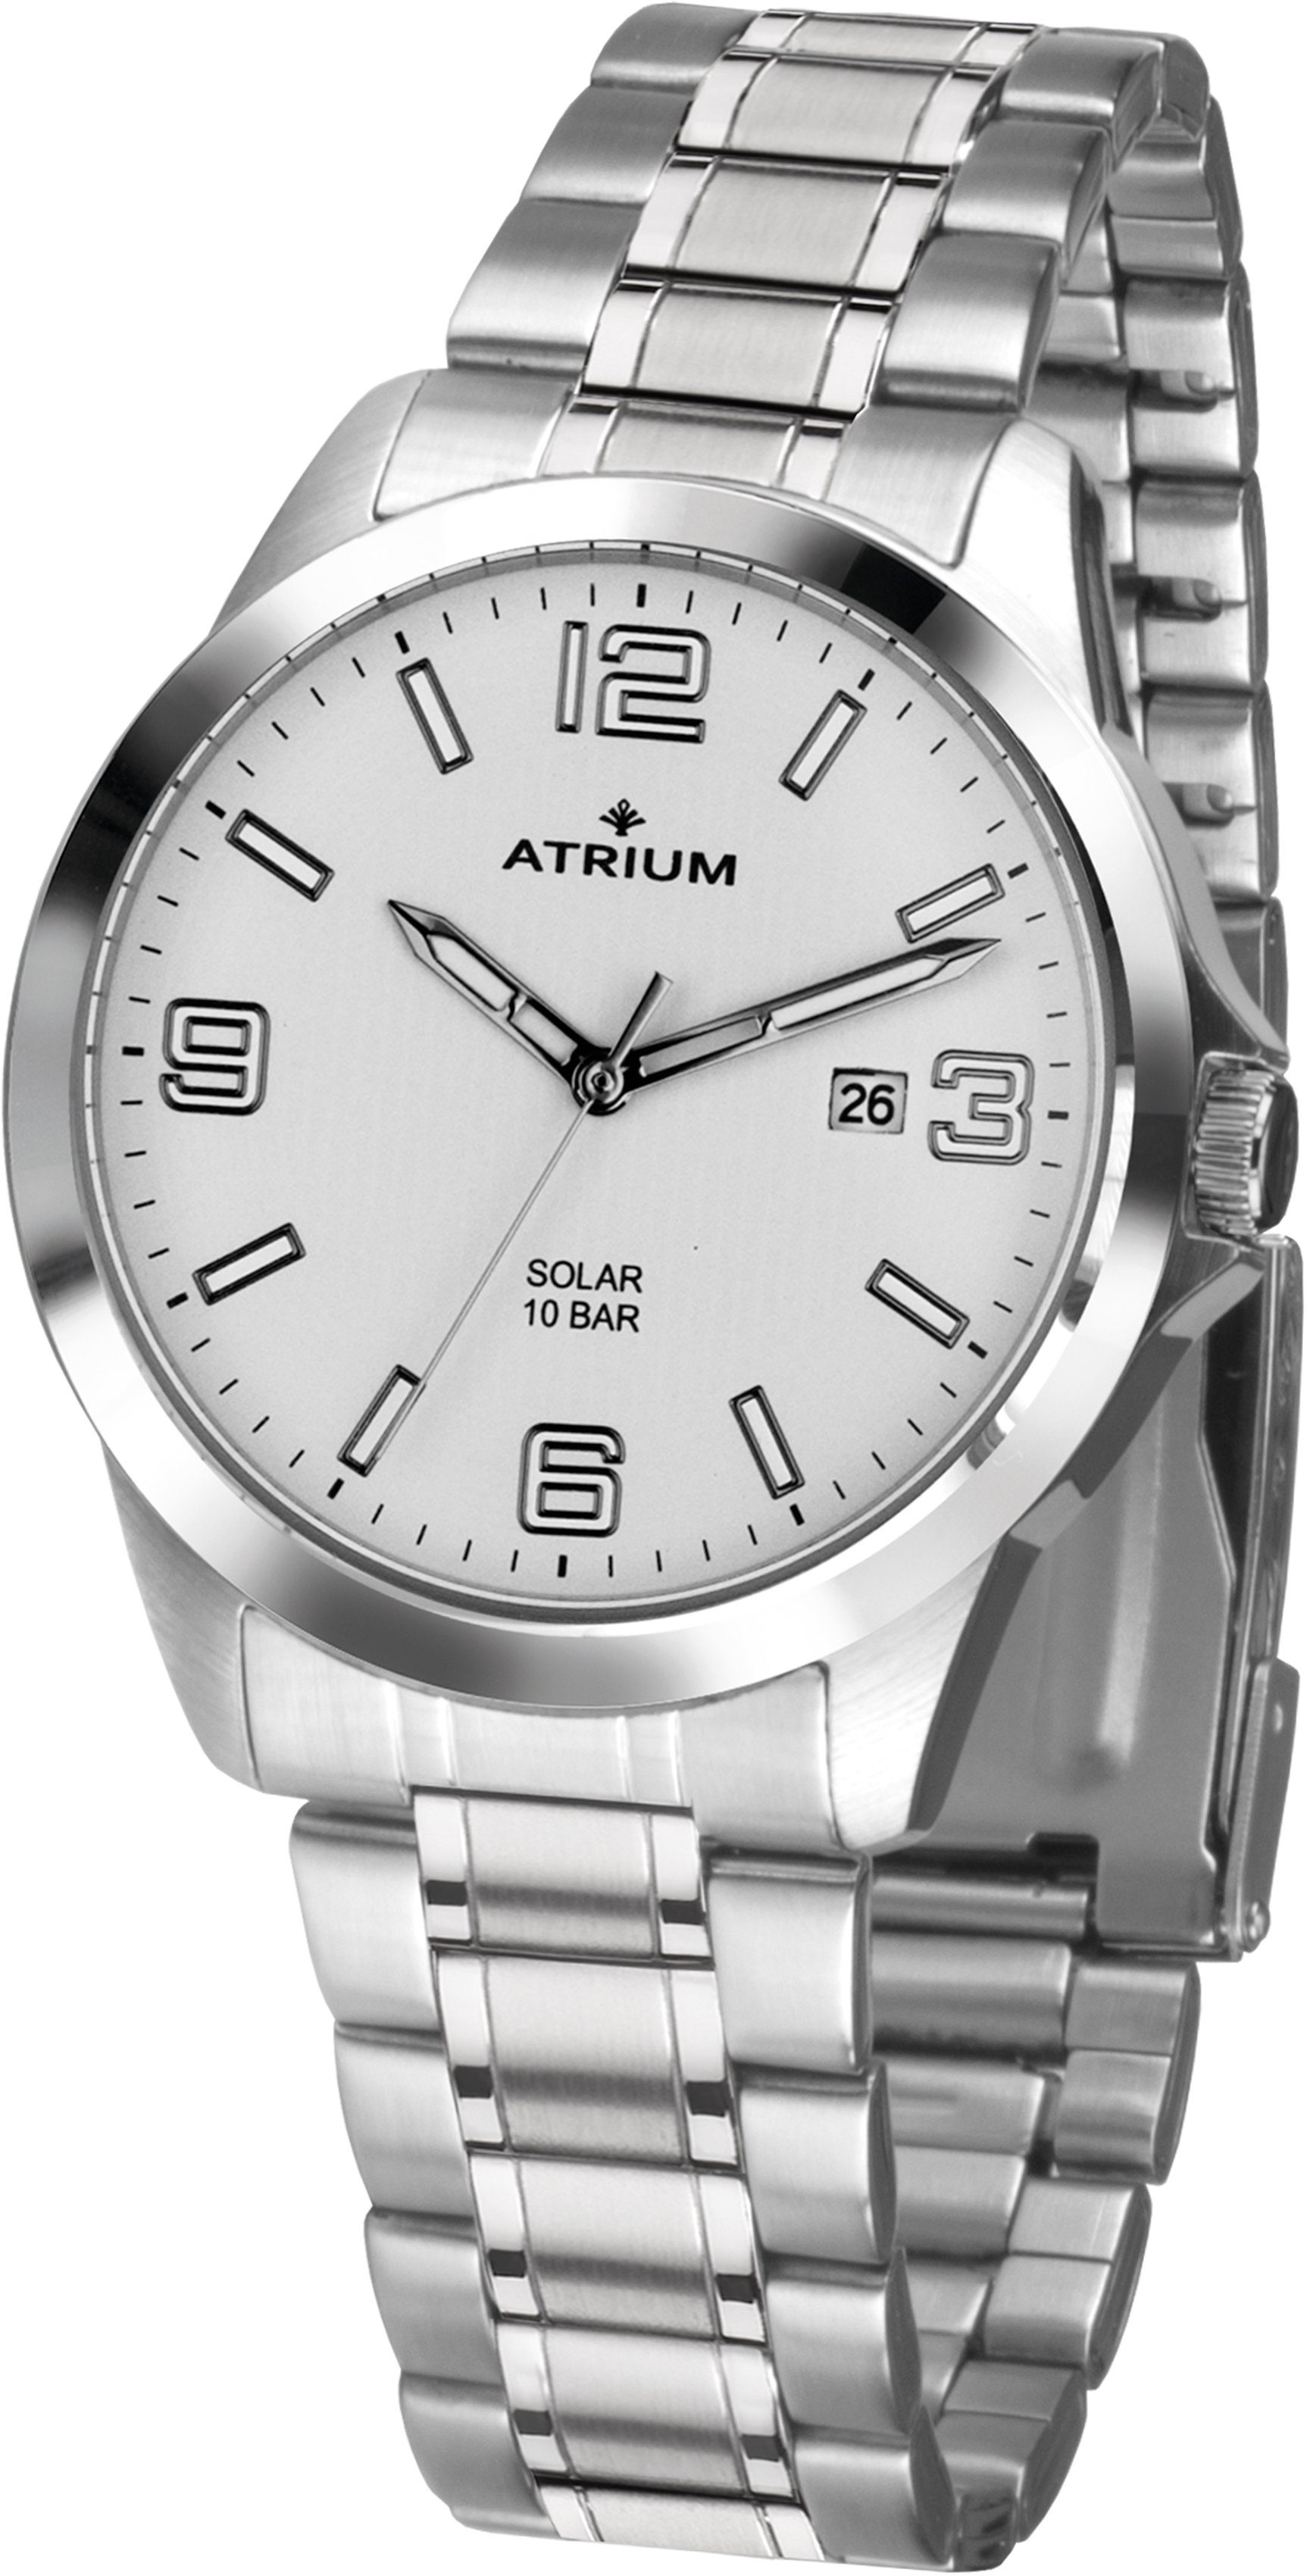 Atrium Solaruhr A32-30, Armbanduhr, Herrenuhr, Datum Leuchtzeiger